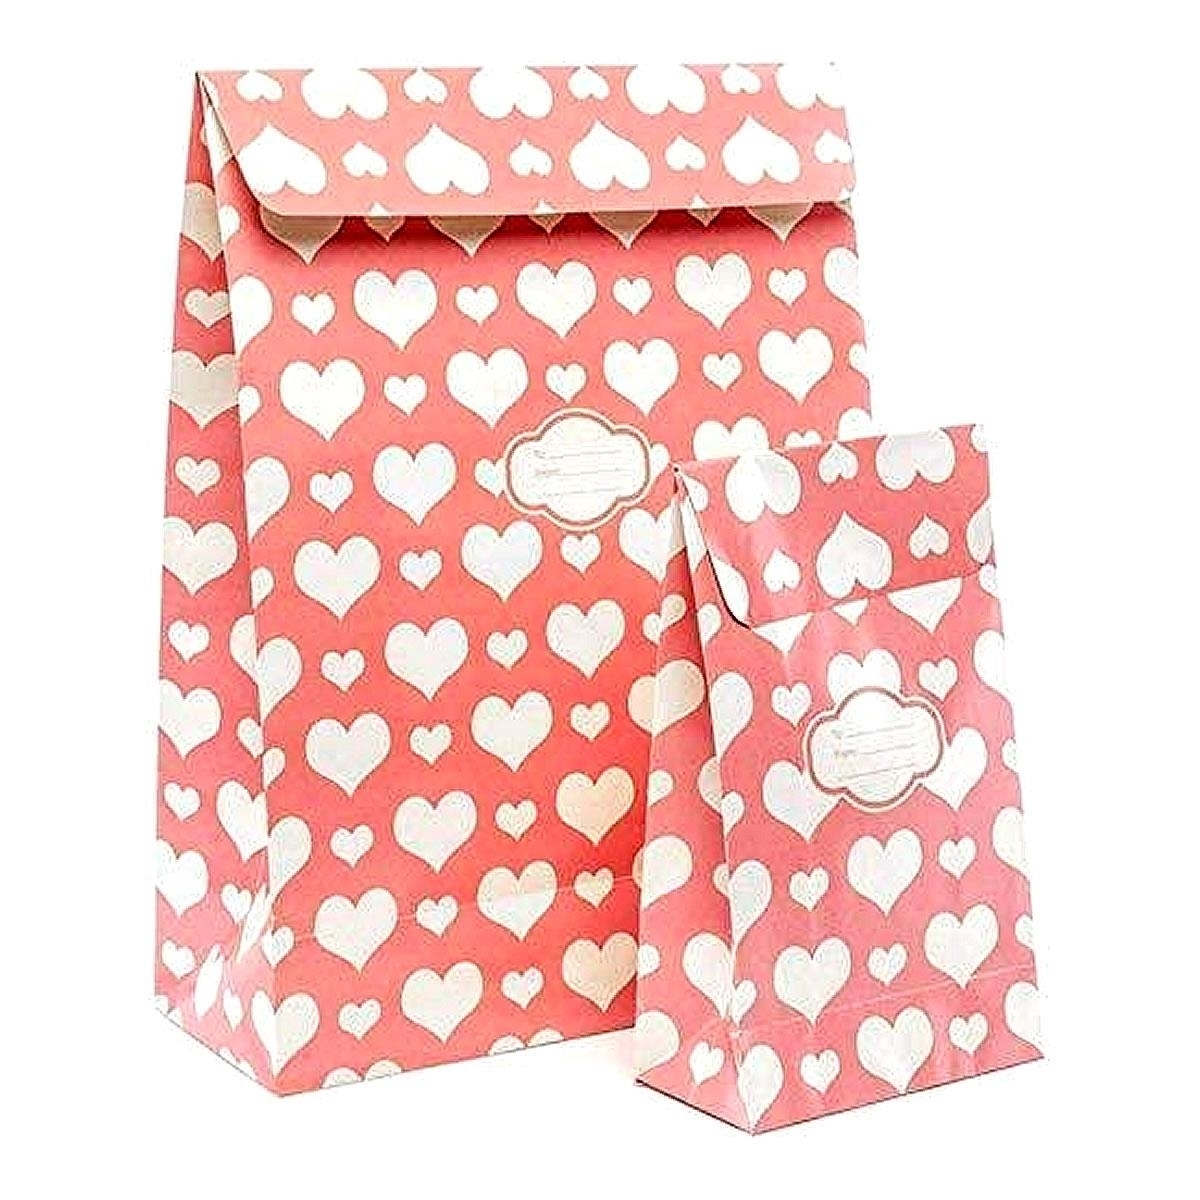 Pressie Pouch Peel & Seal Gift Bag Pink Hearts 12pk Medium No-Wrap Present